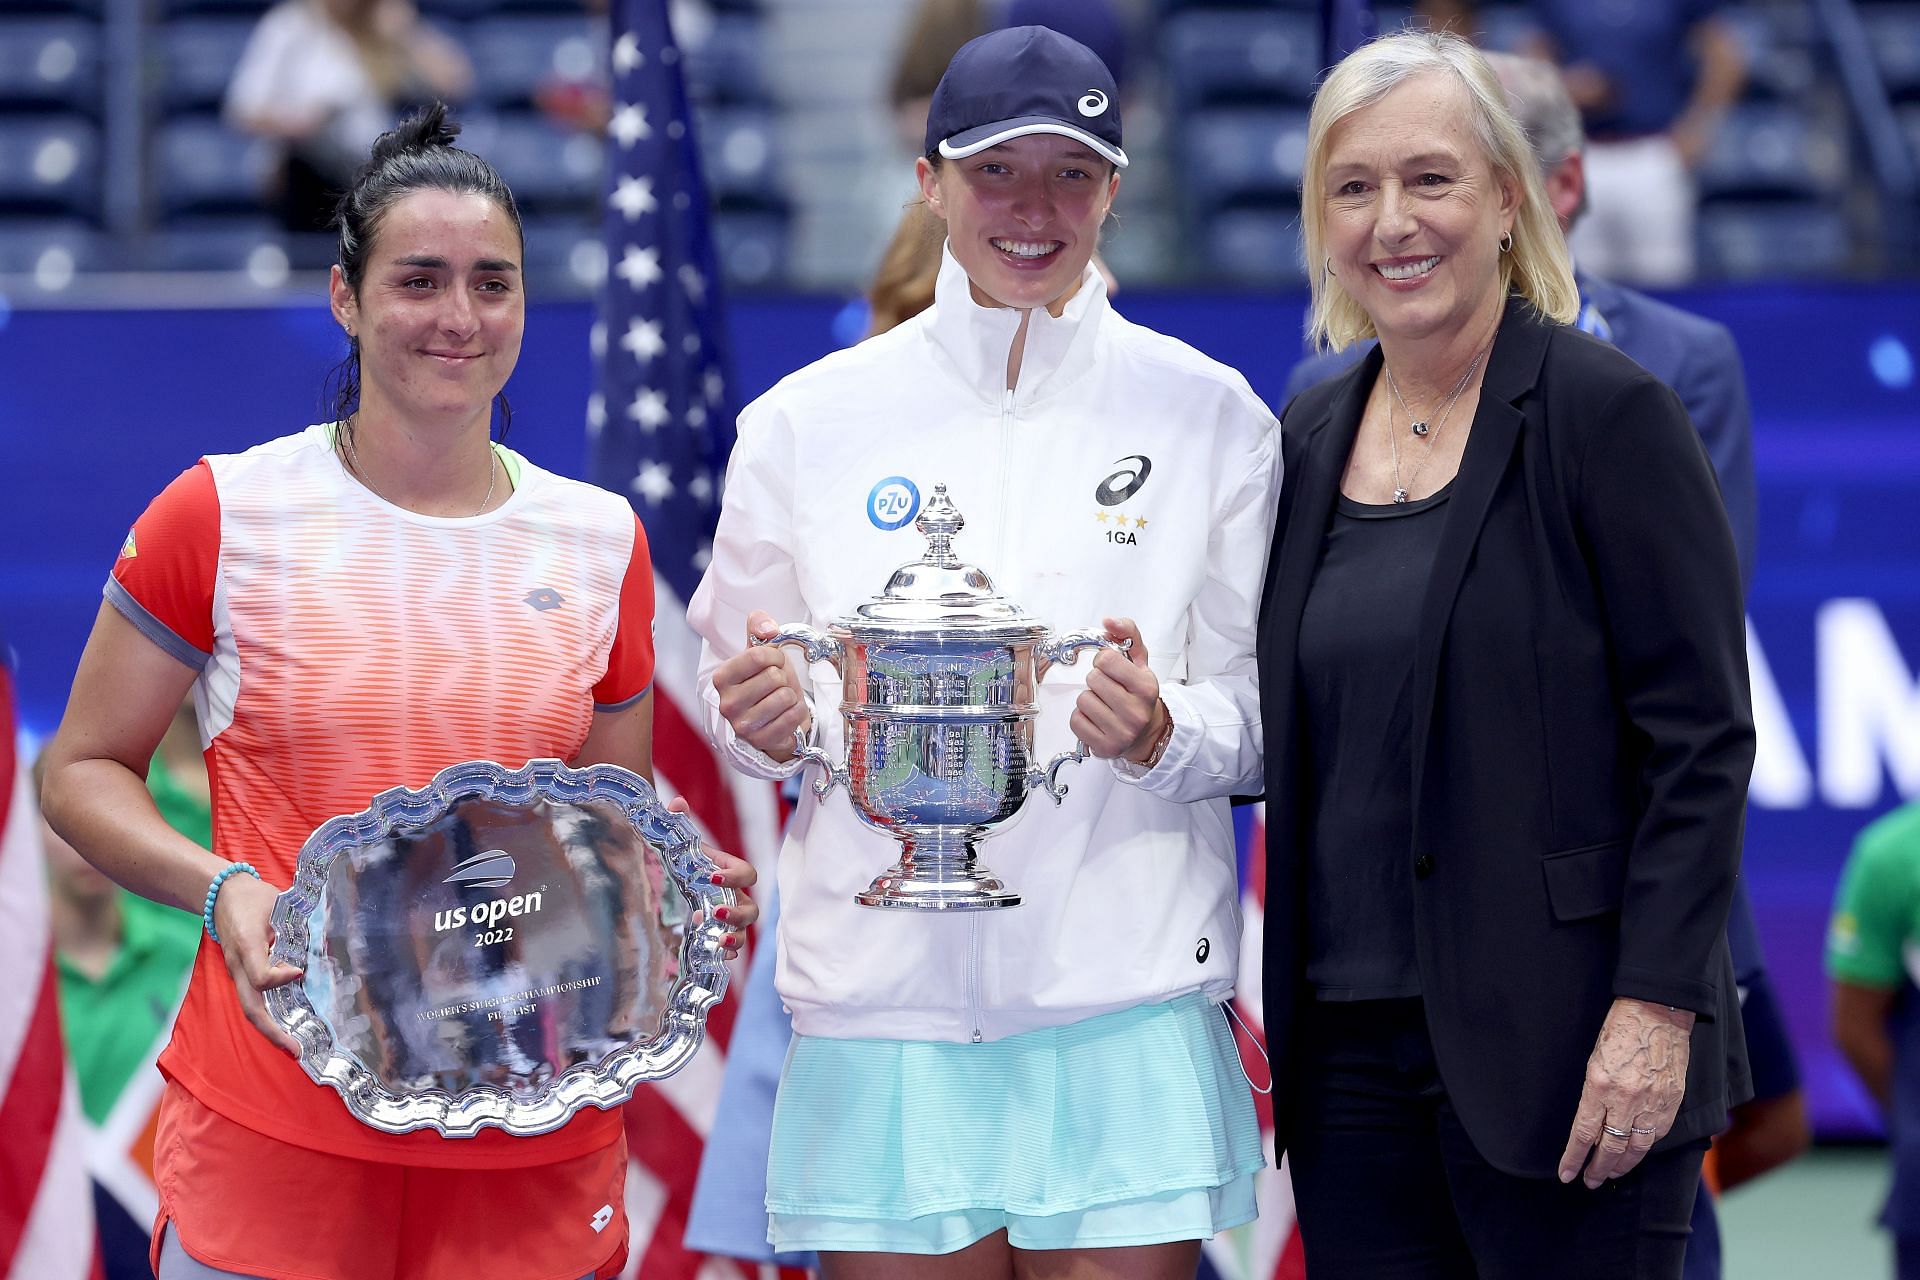 Iga Swiatek (C) and Martina Navratilova (R) pose for a picture at the 2022 US Open